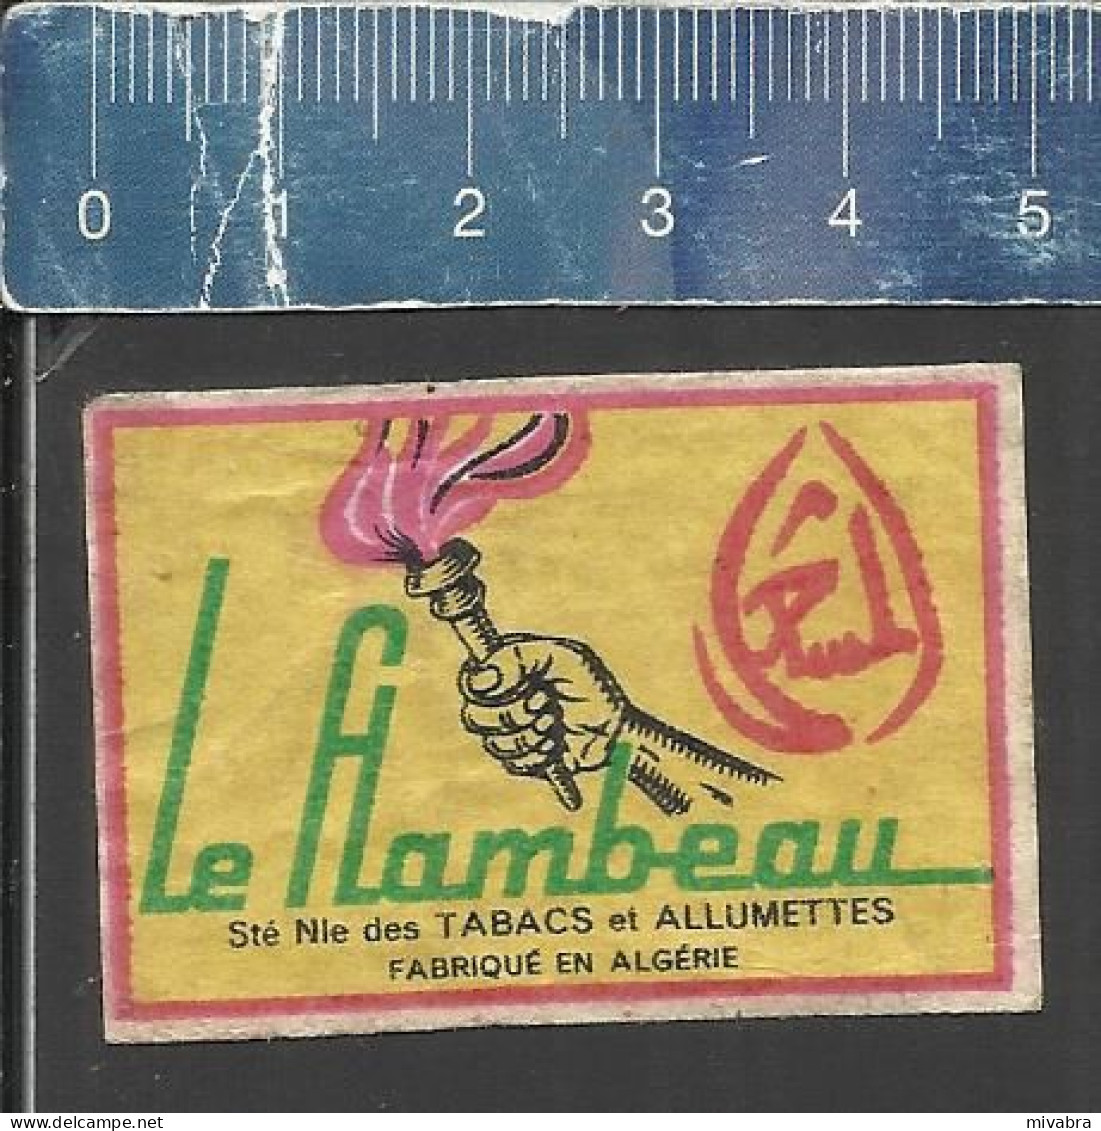 LE FLAMBEAU ( TORCH FAKKEL ) - OLD MATCHBOX LABEL ALGERIA - Matchbox Labels